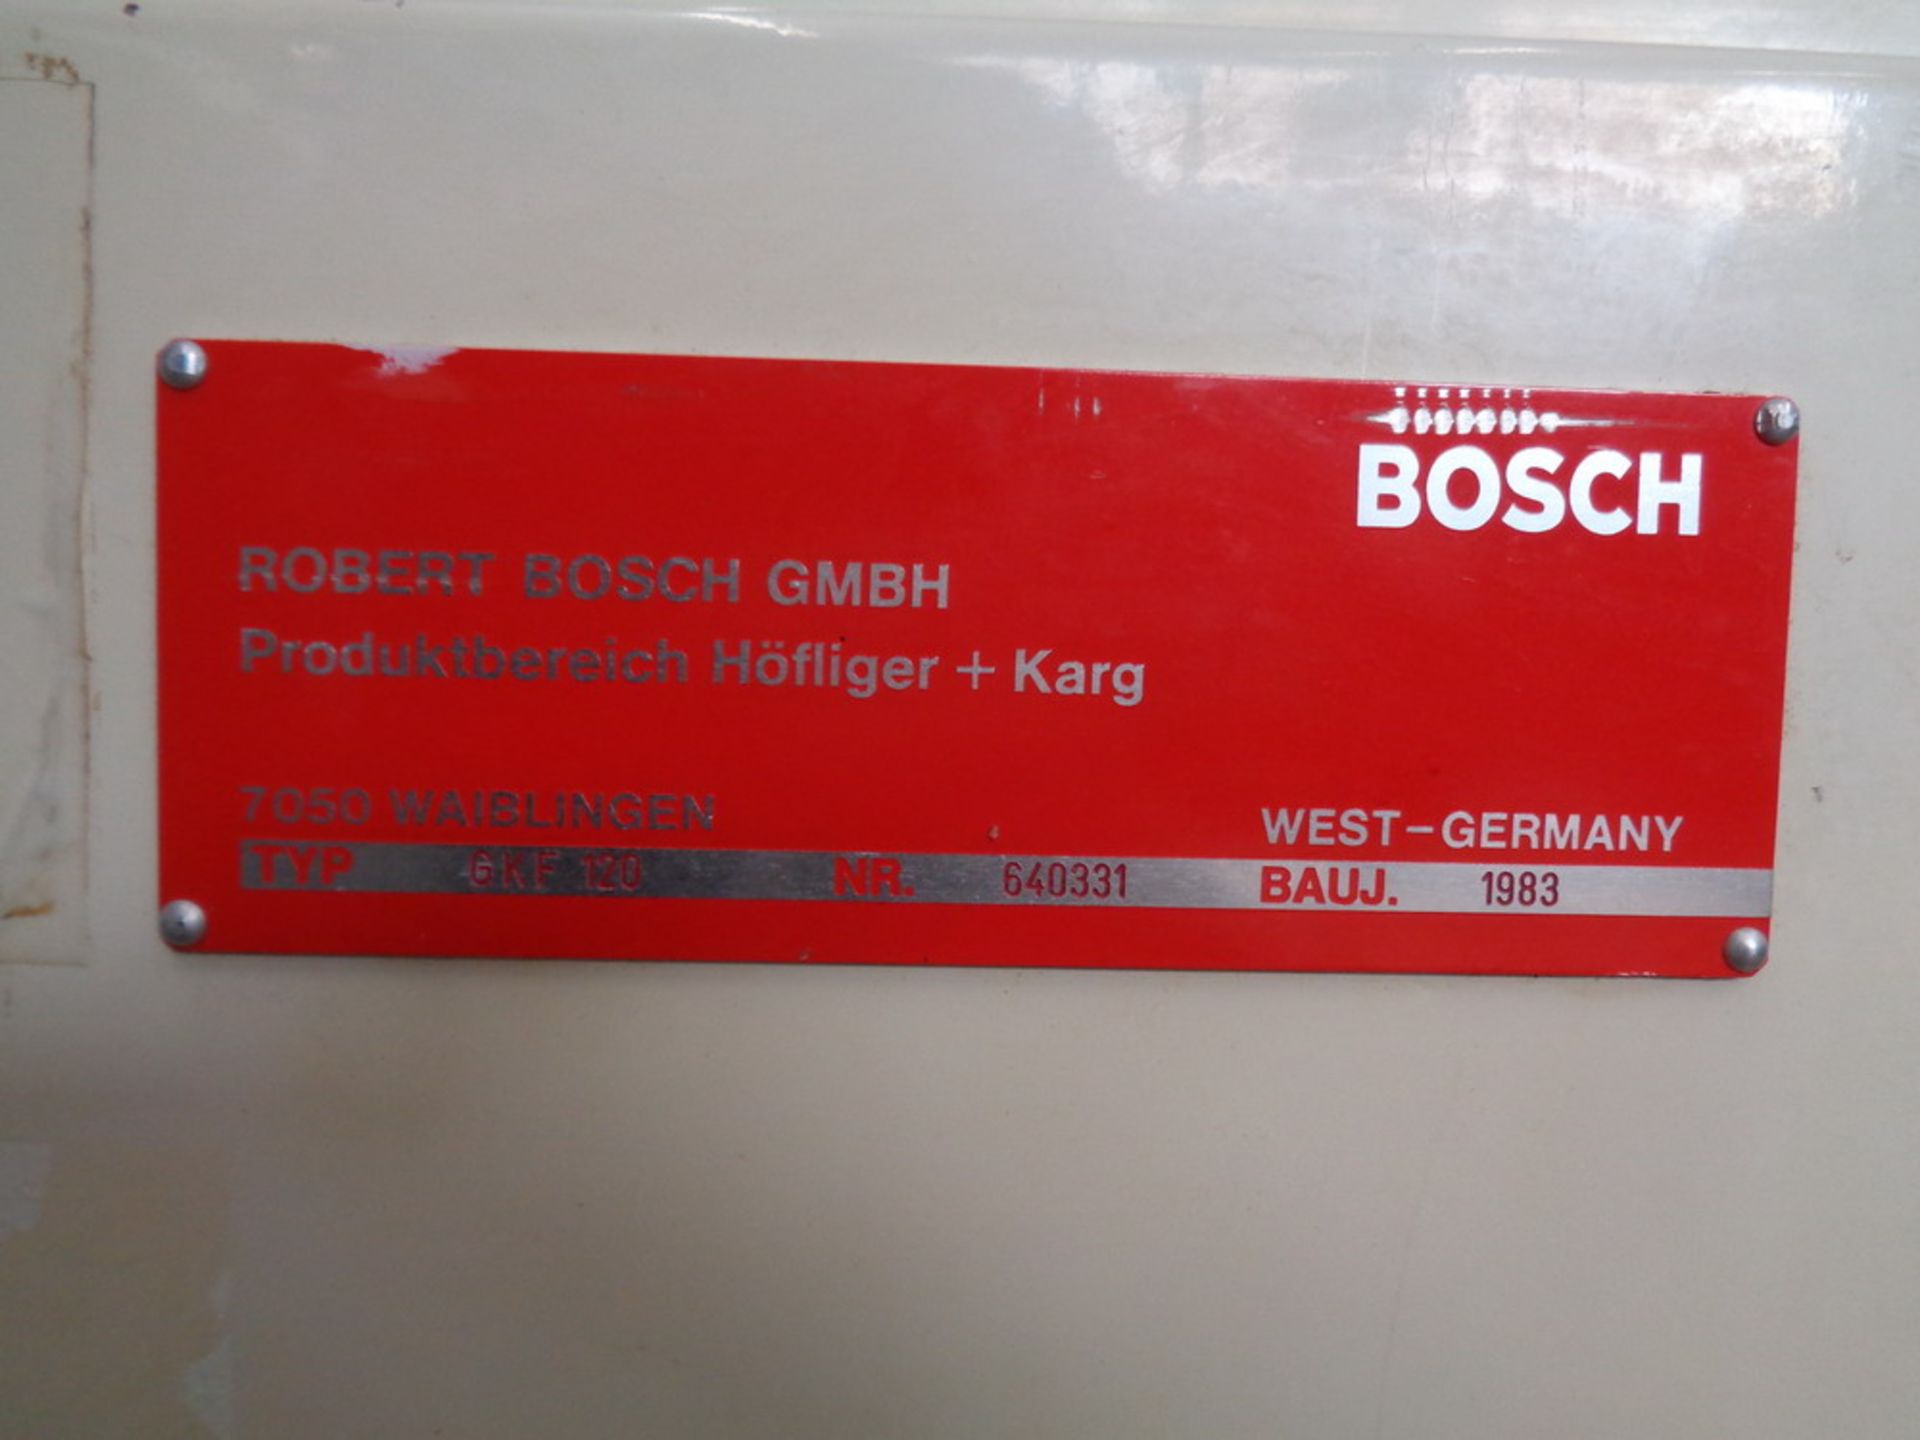 Bosch GKF120 Encapsulator, S/N 640381 - Image 5 of 16